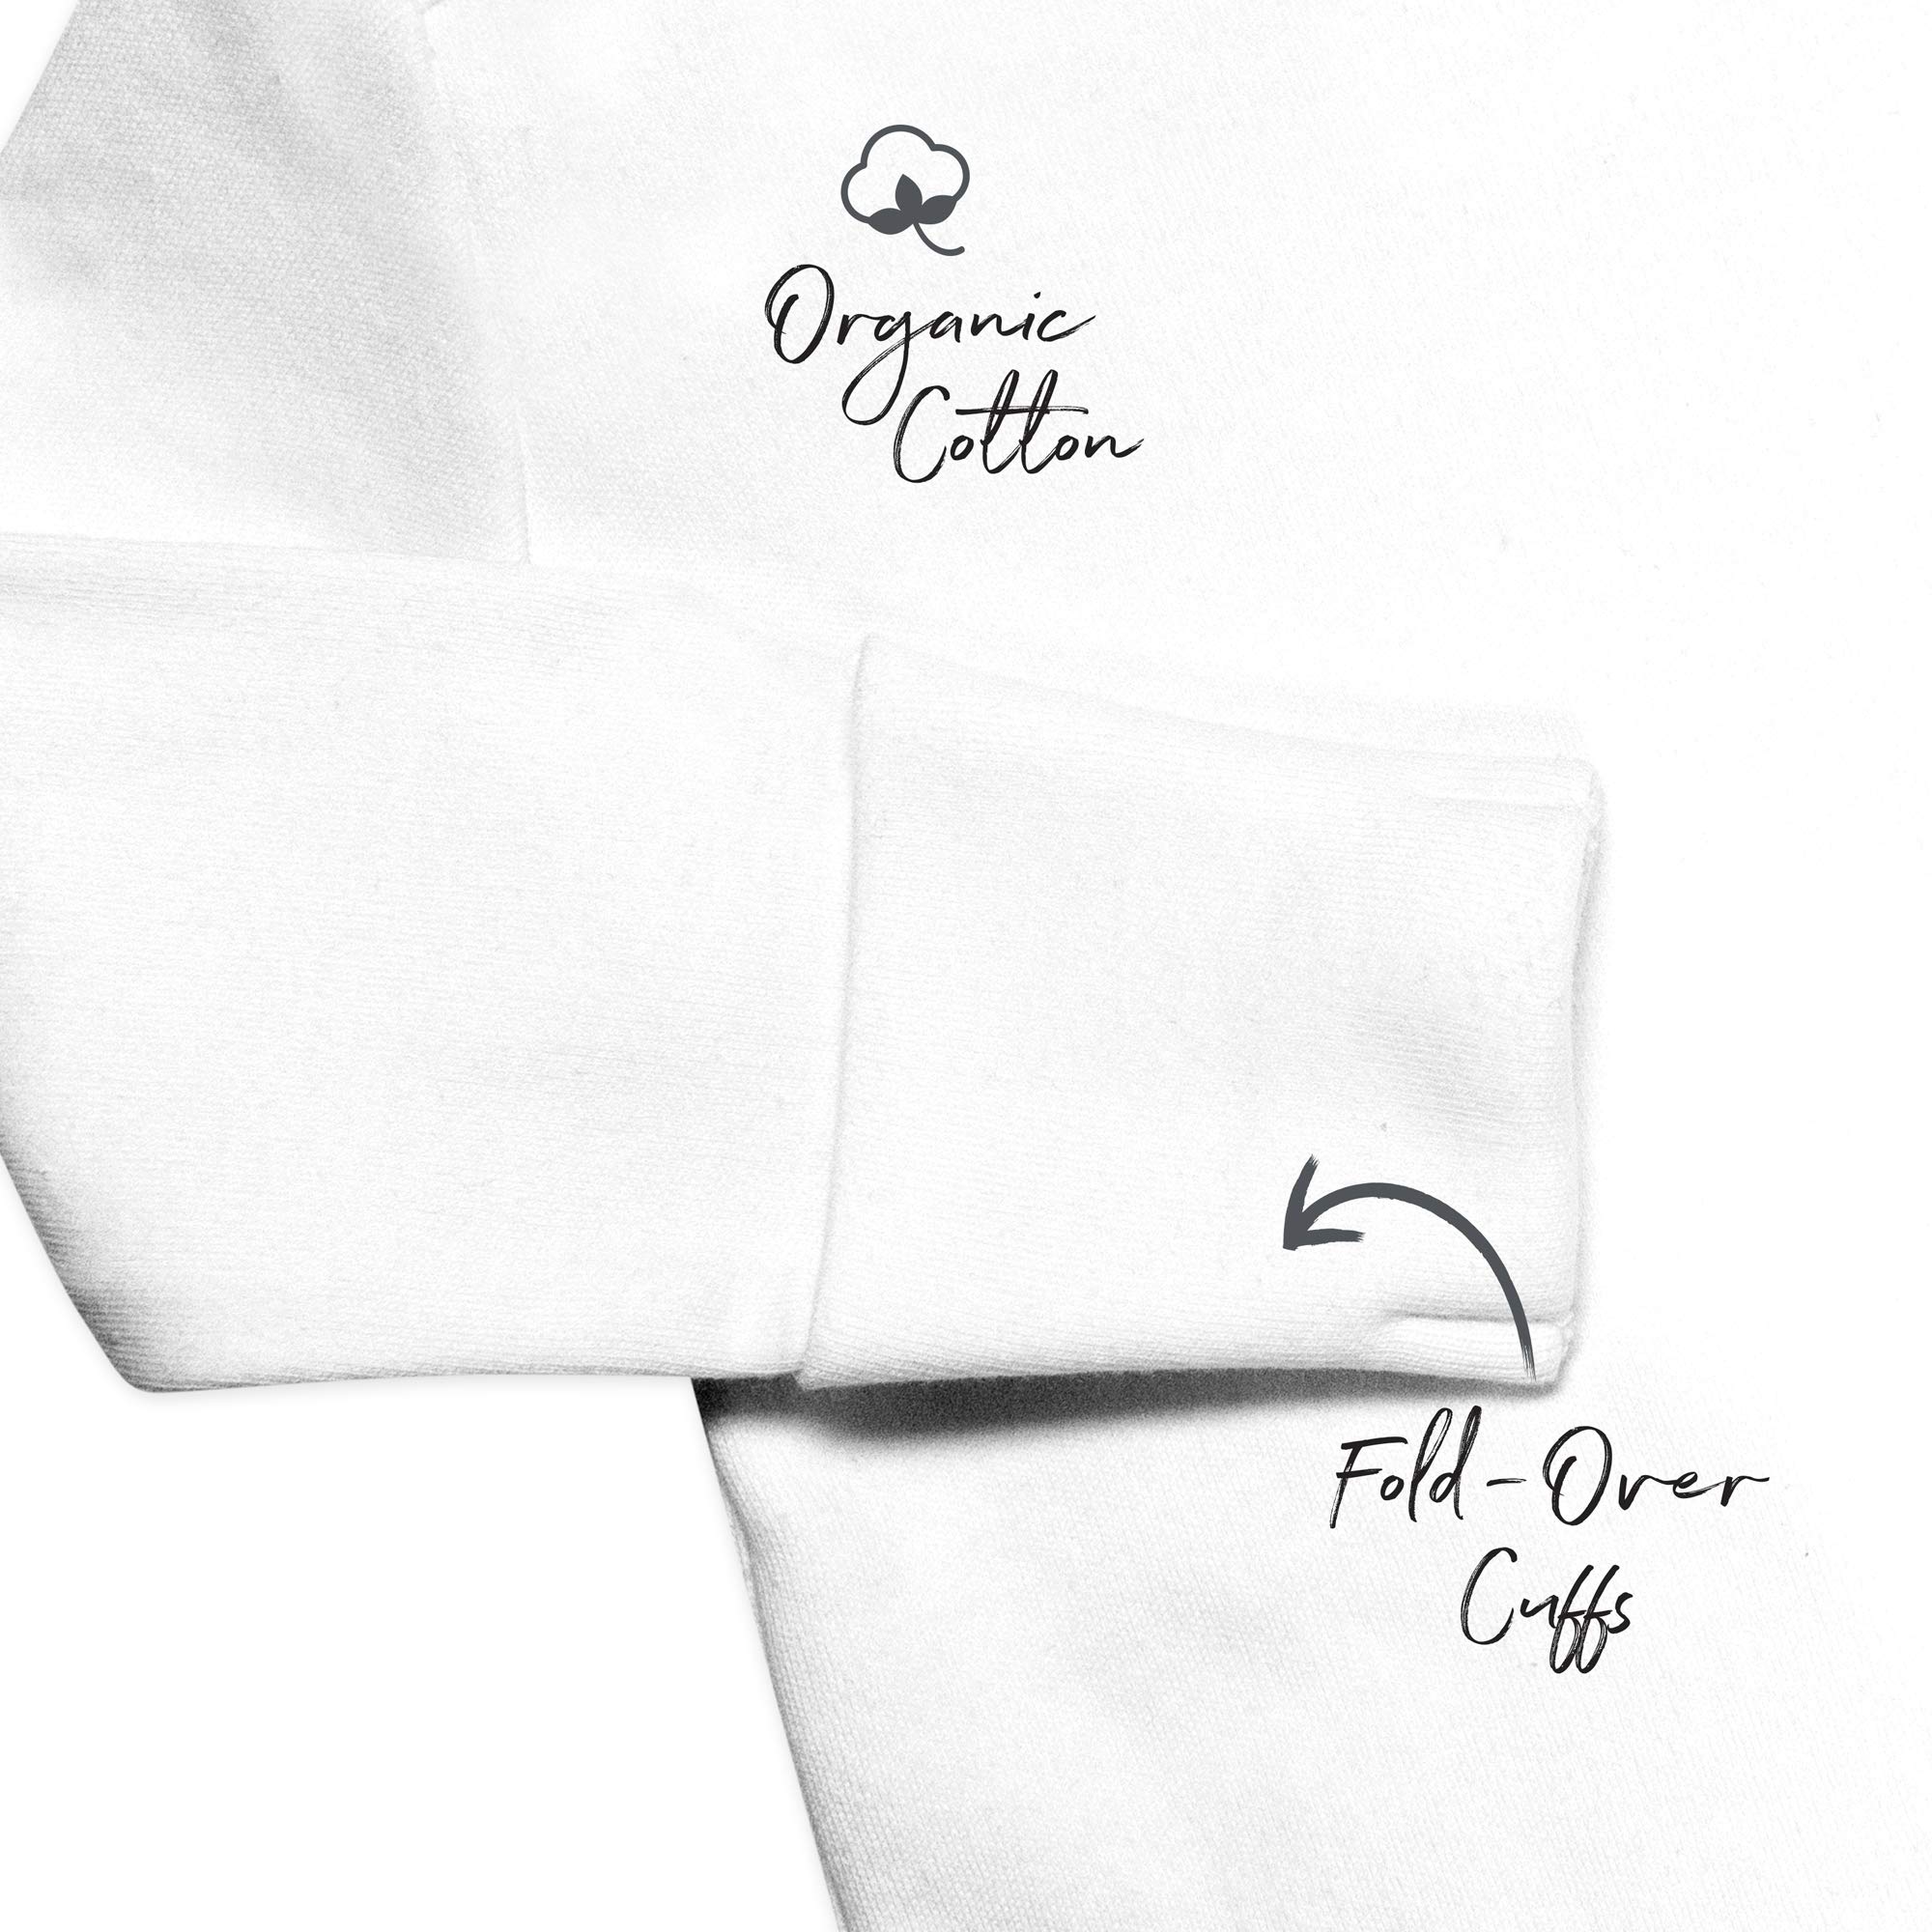 HonestBaby 3-Pack Organic Cotton Long Sleeve Side-Snap Kimono Tops